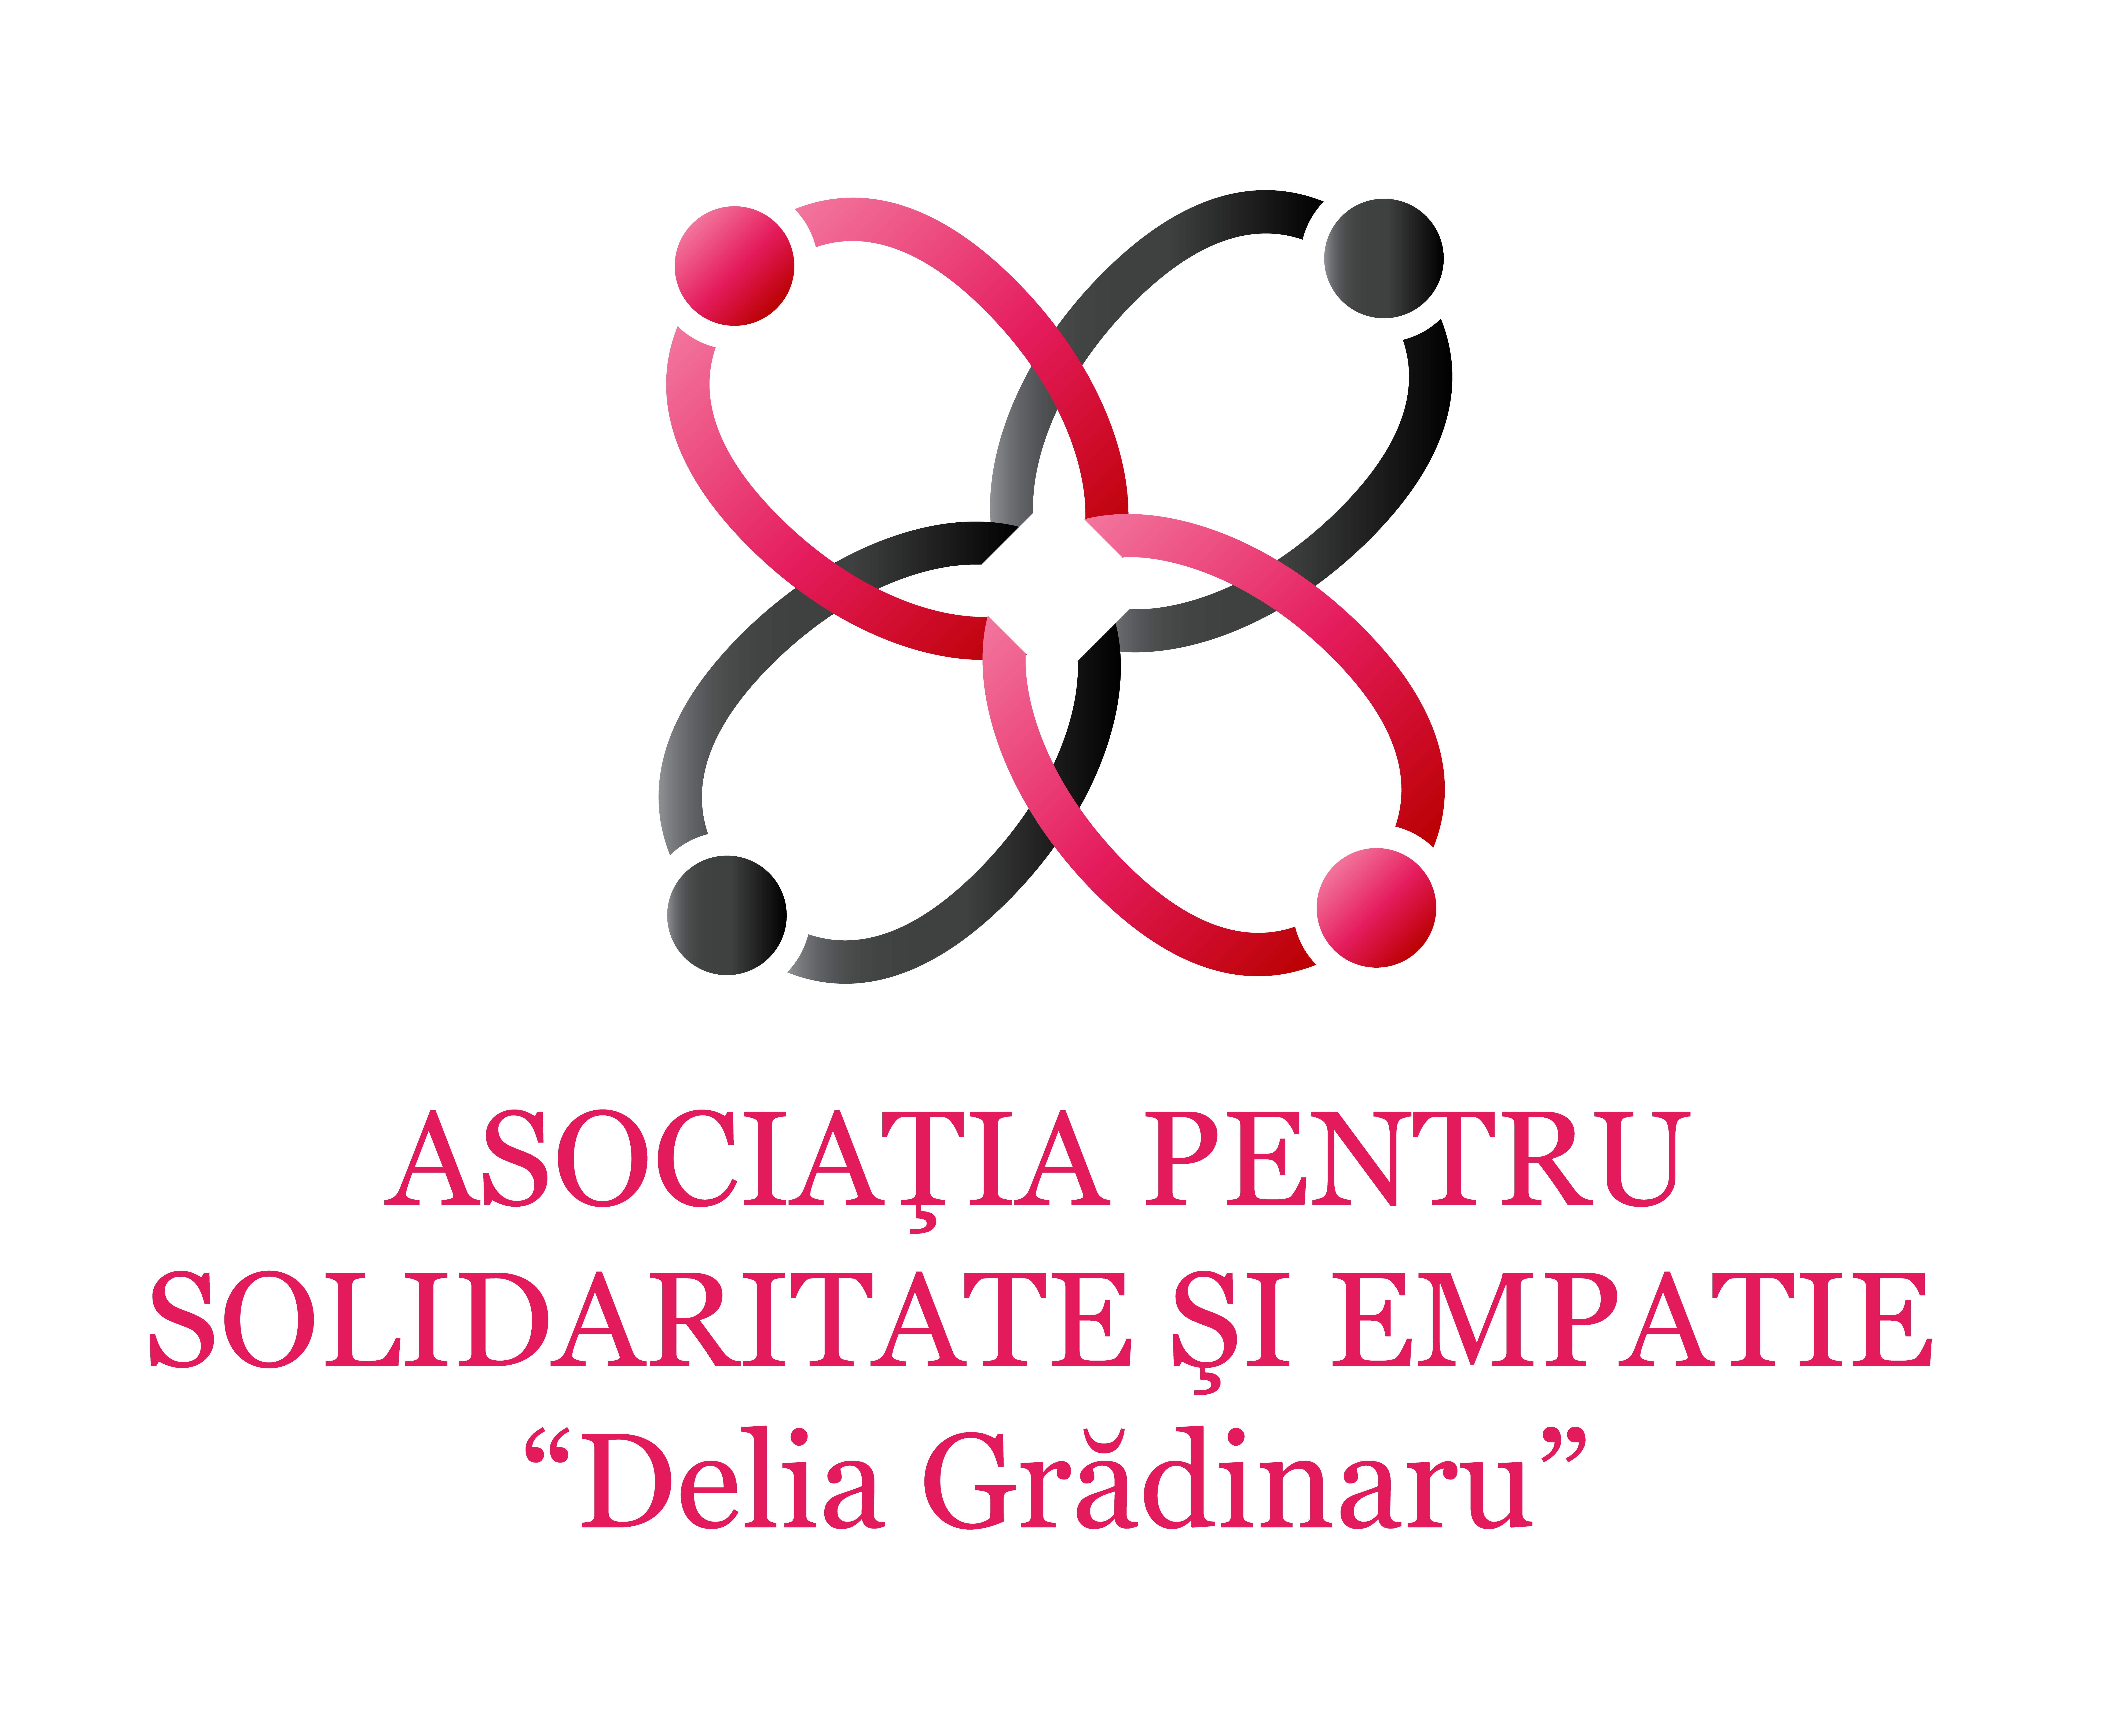 Asociatia pentru Solidaritate si Empatie Delia Gradinaru logo